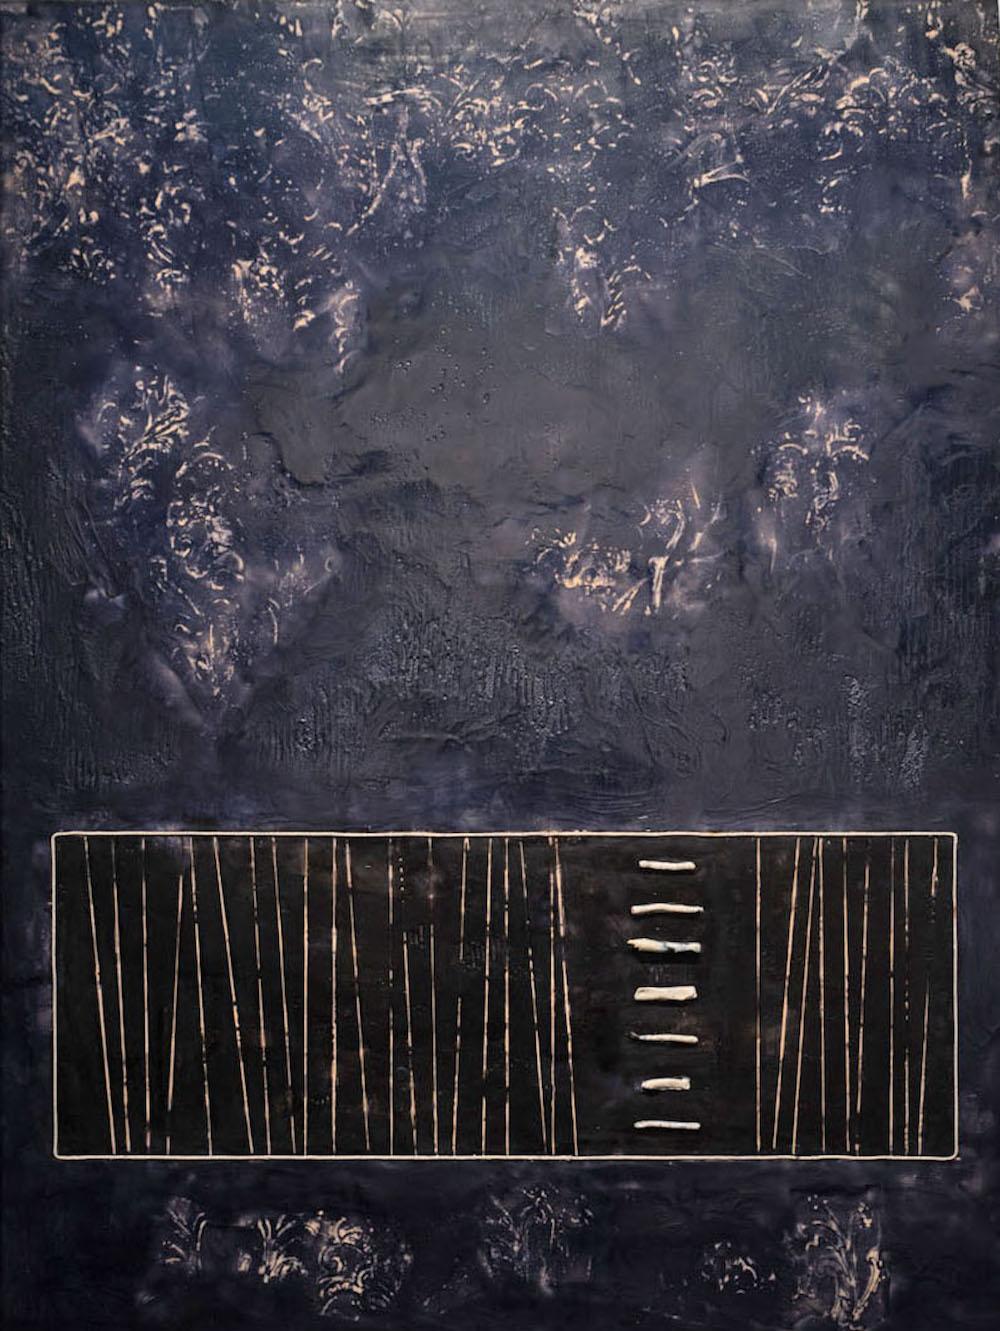 Linda Frueh Abstract Painting - Box Full of Memories - Contemporary Encaustic (Black + Grey + White)